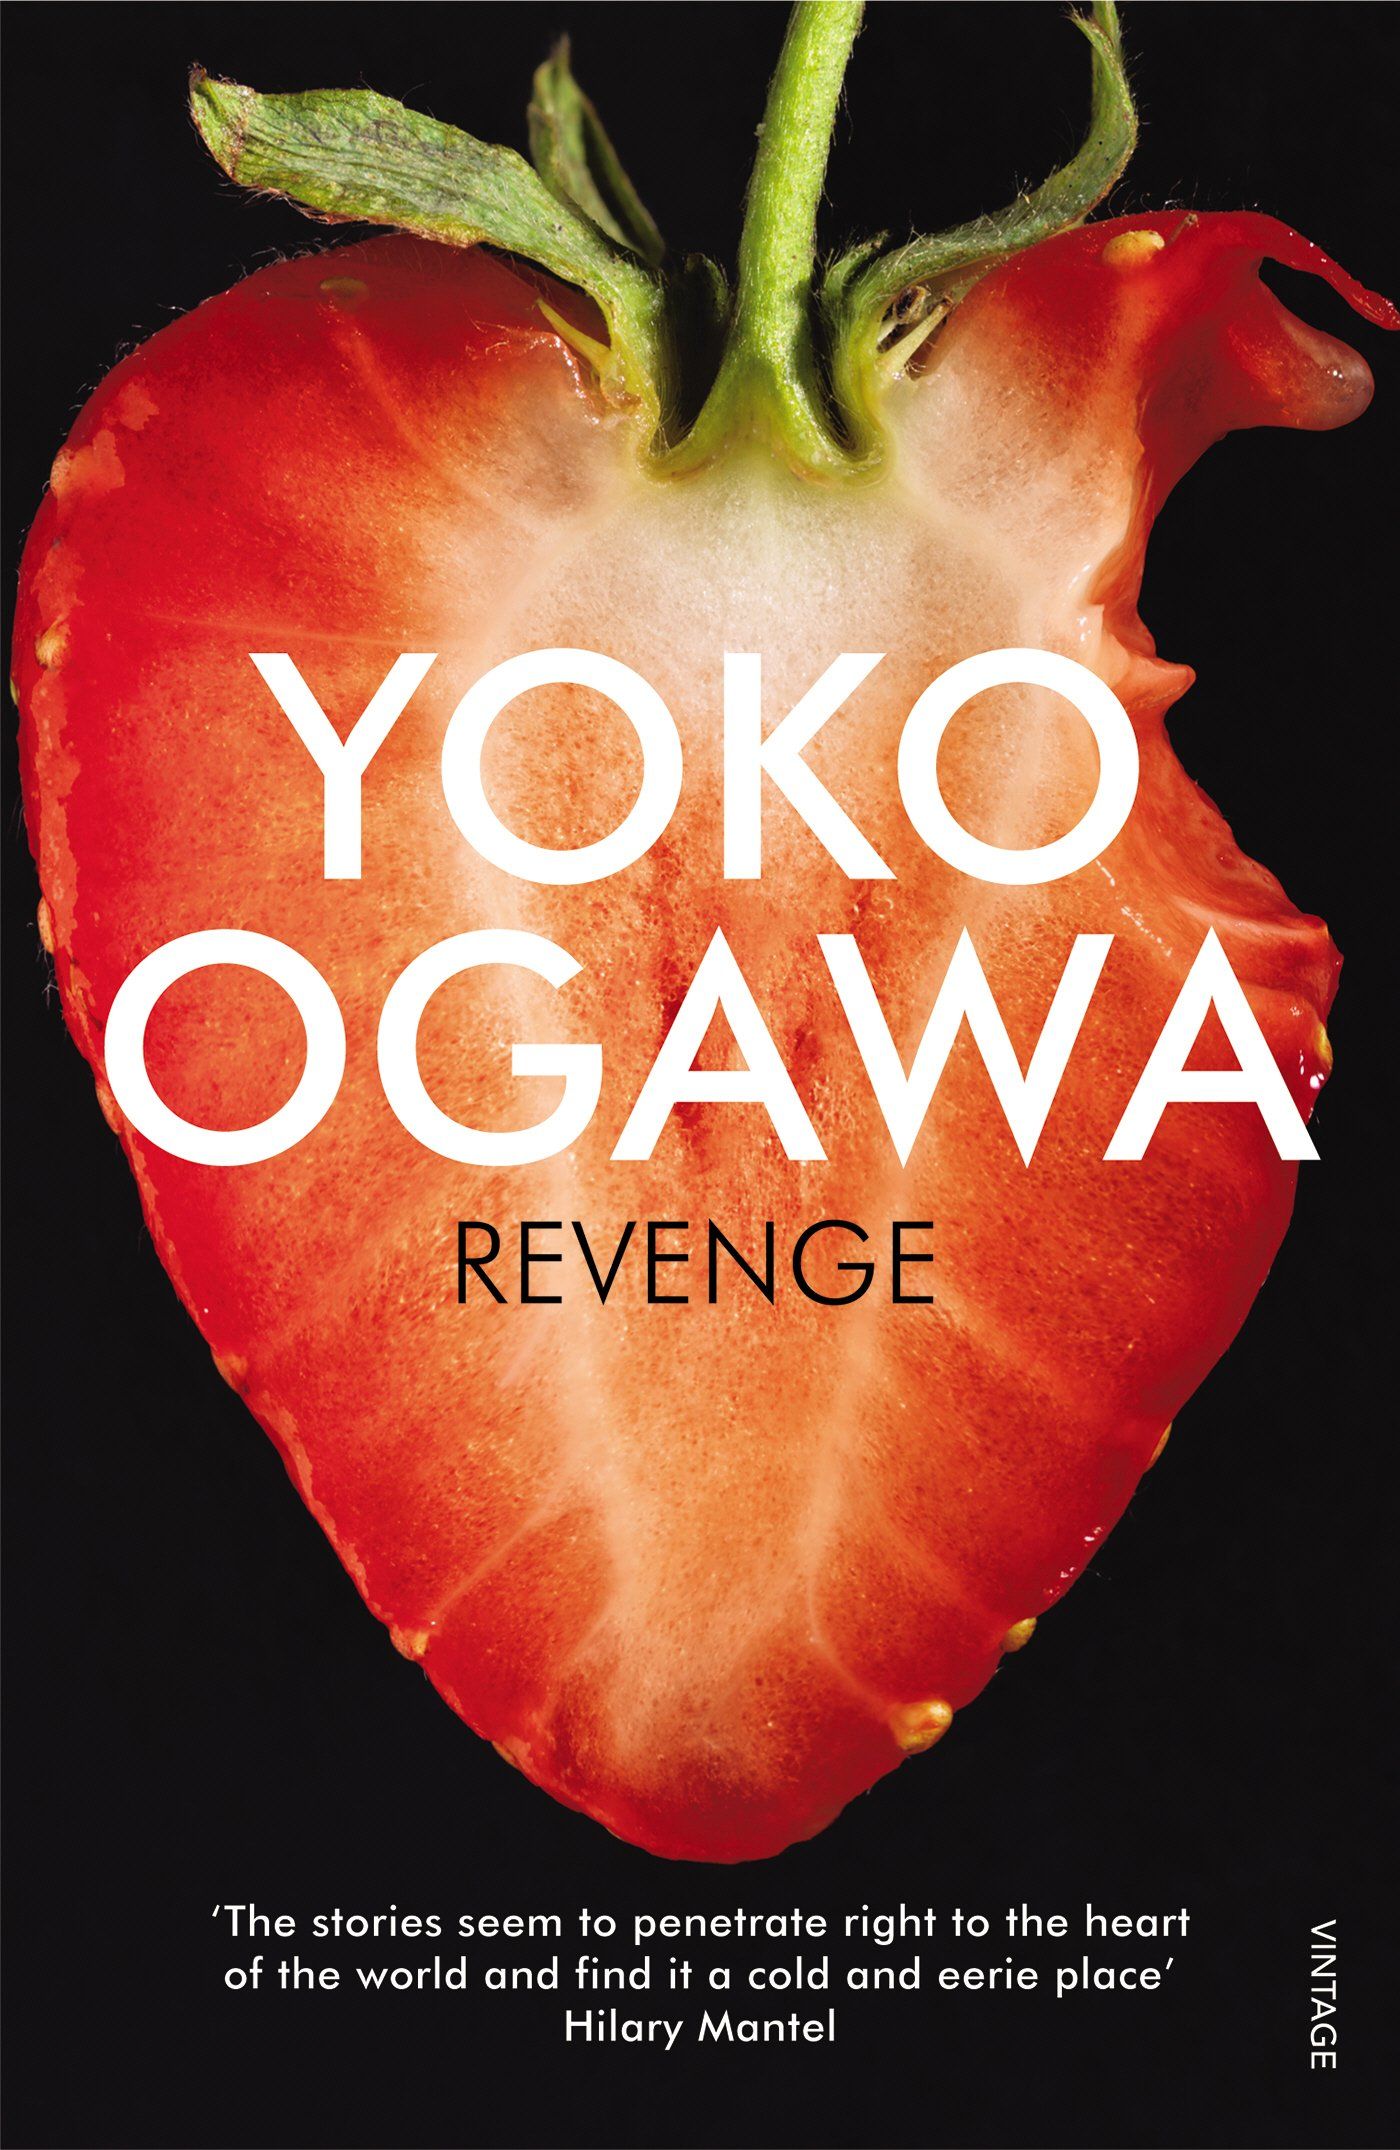 Yoko Ogawa's Revenge